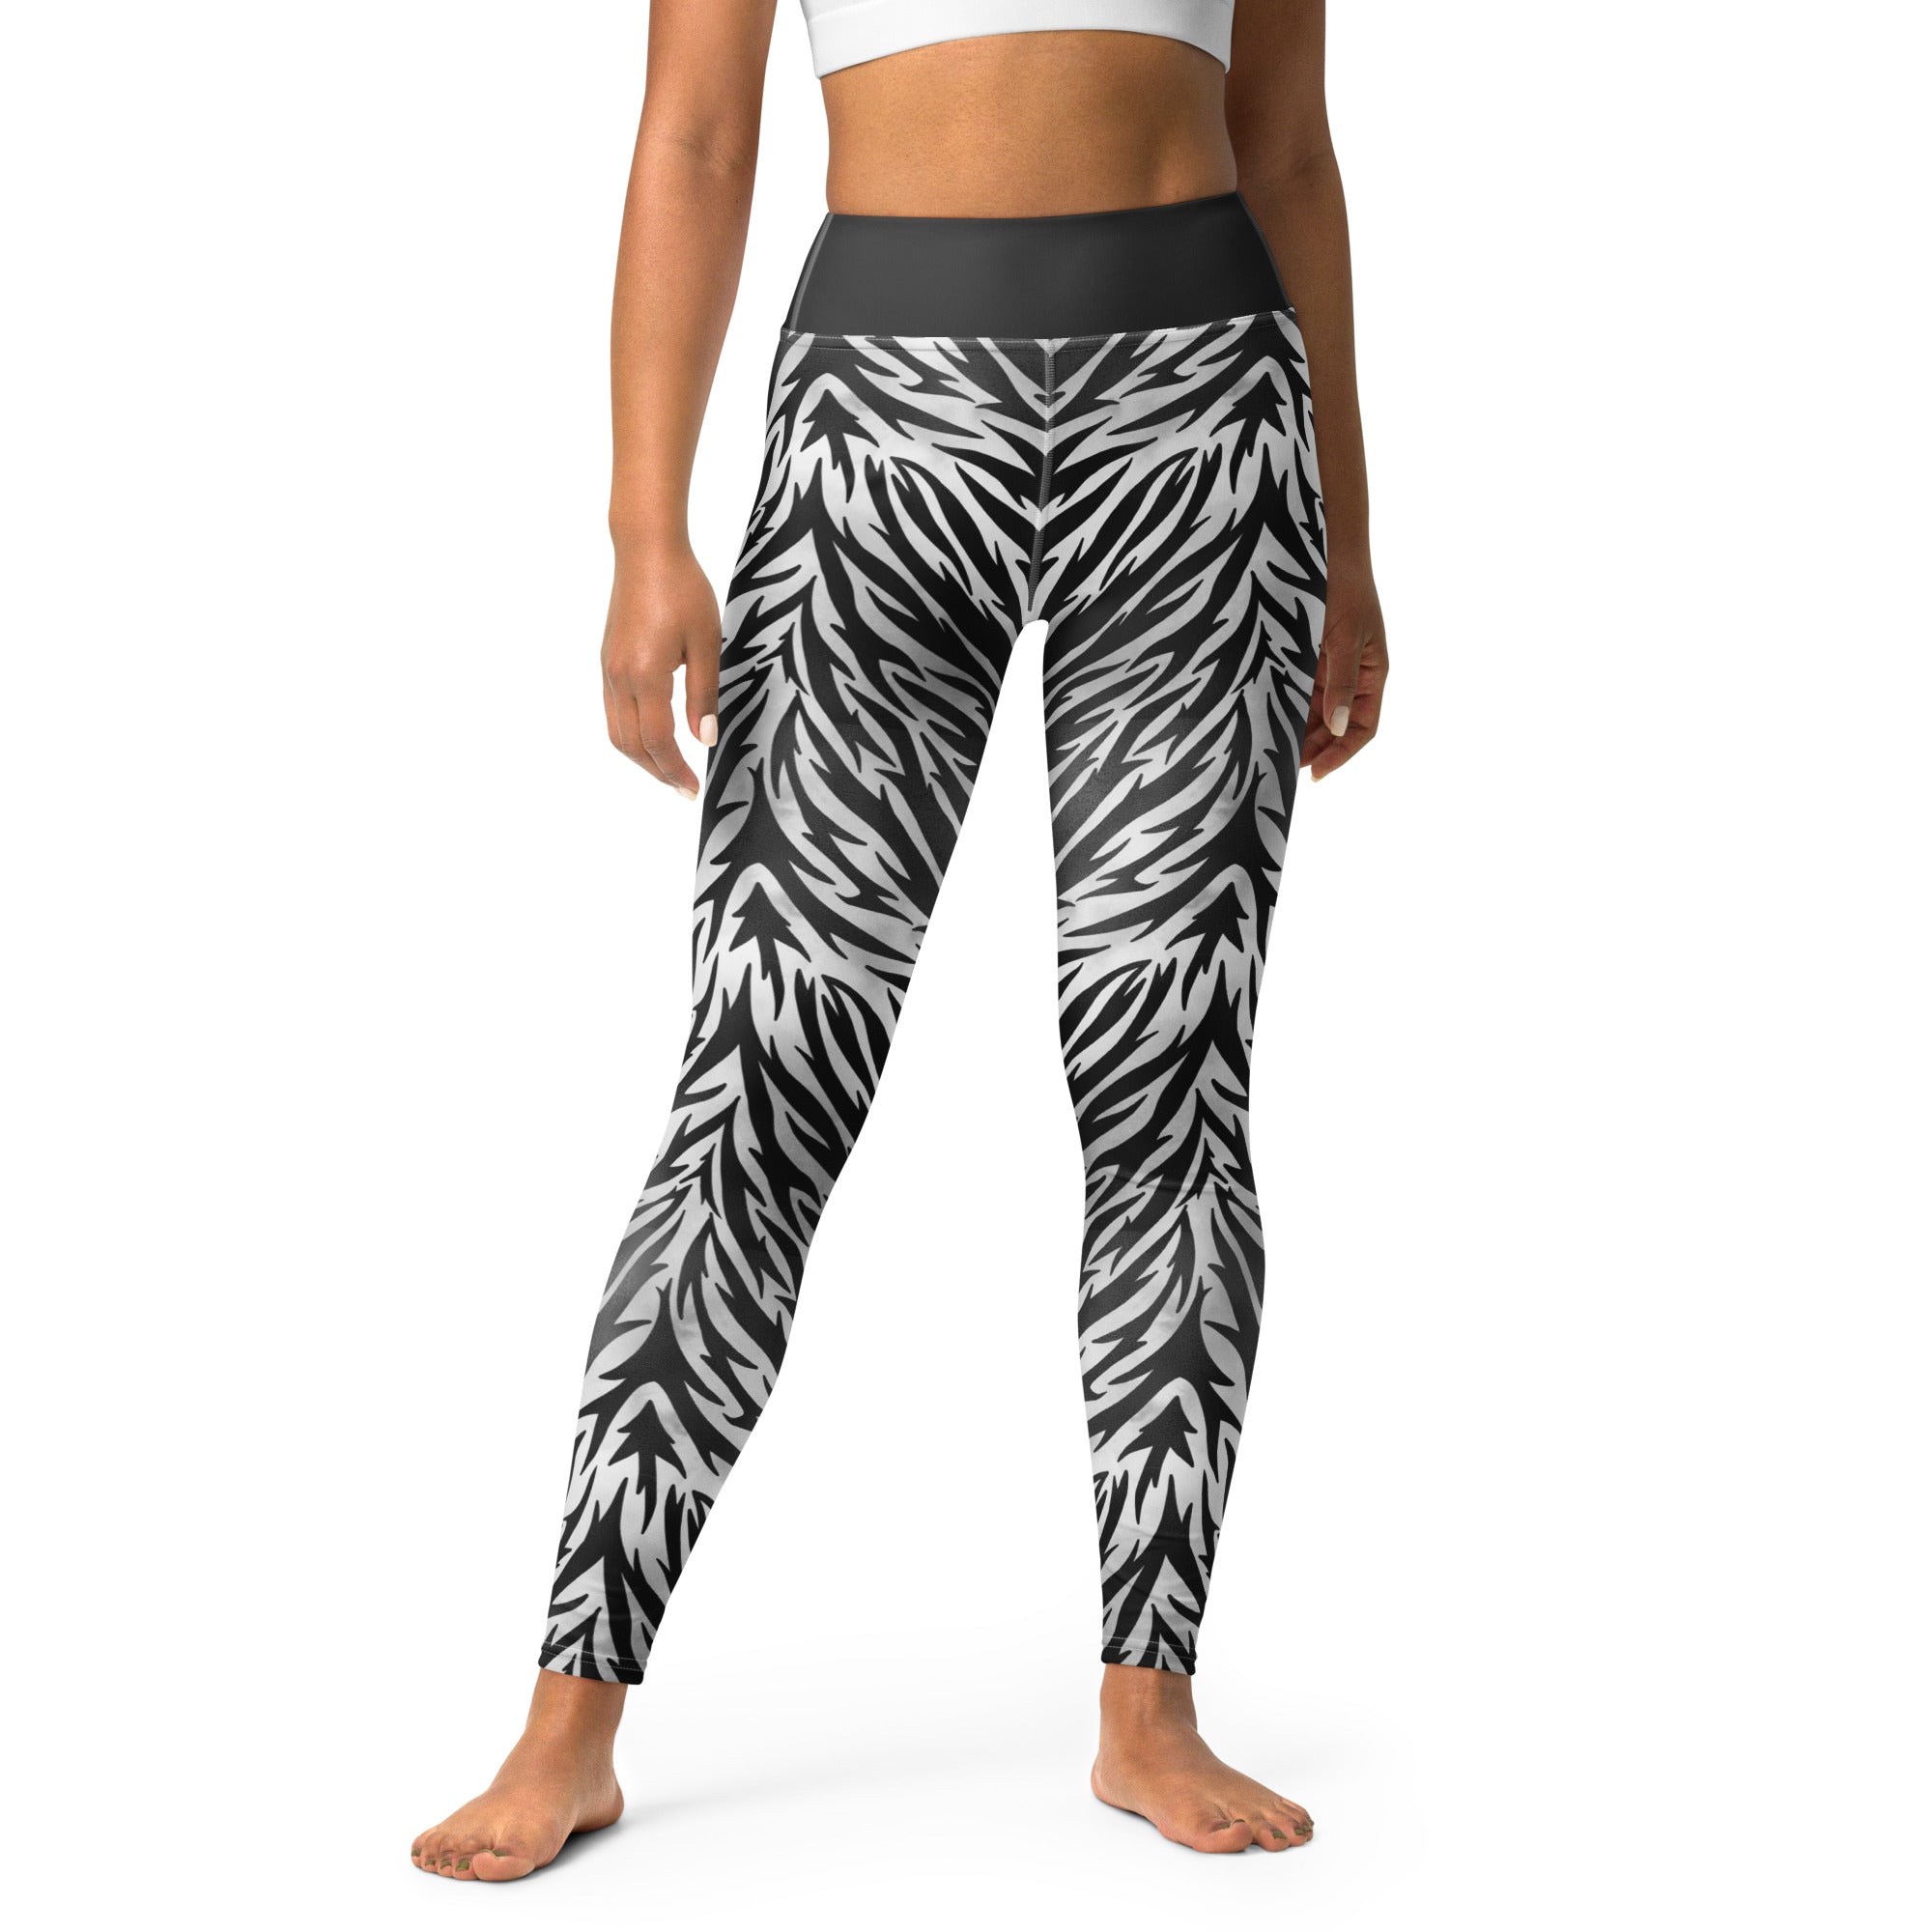 Yoga Leggings- Zebra print Black and White